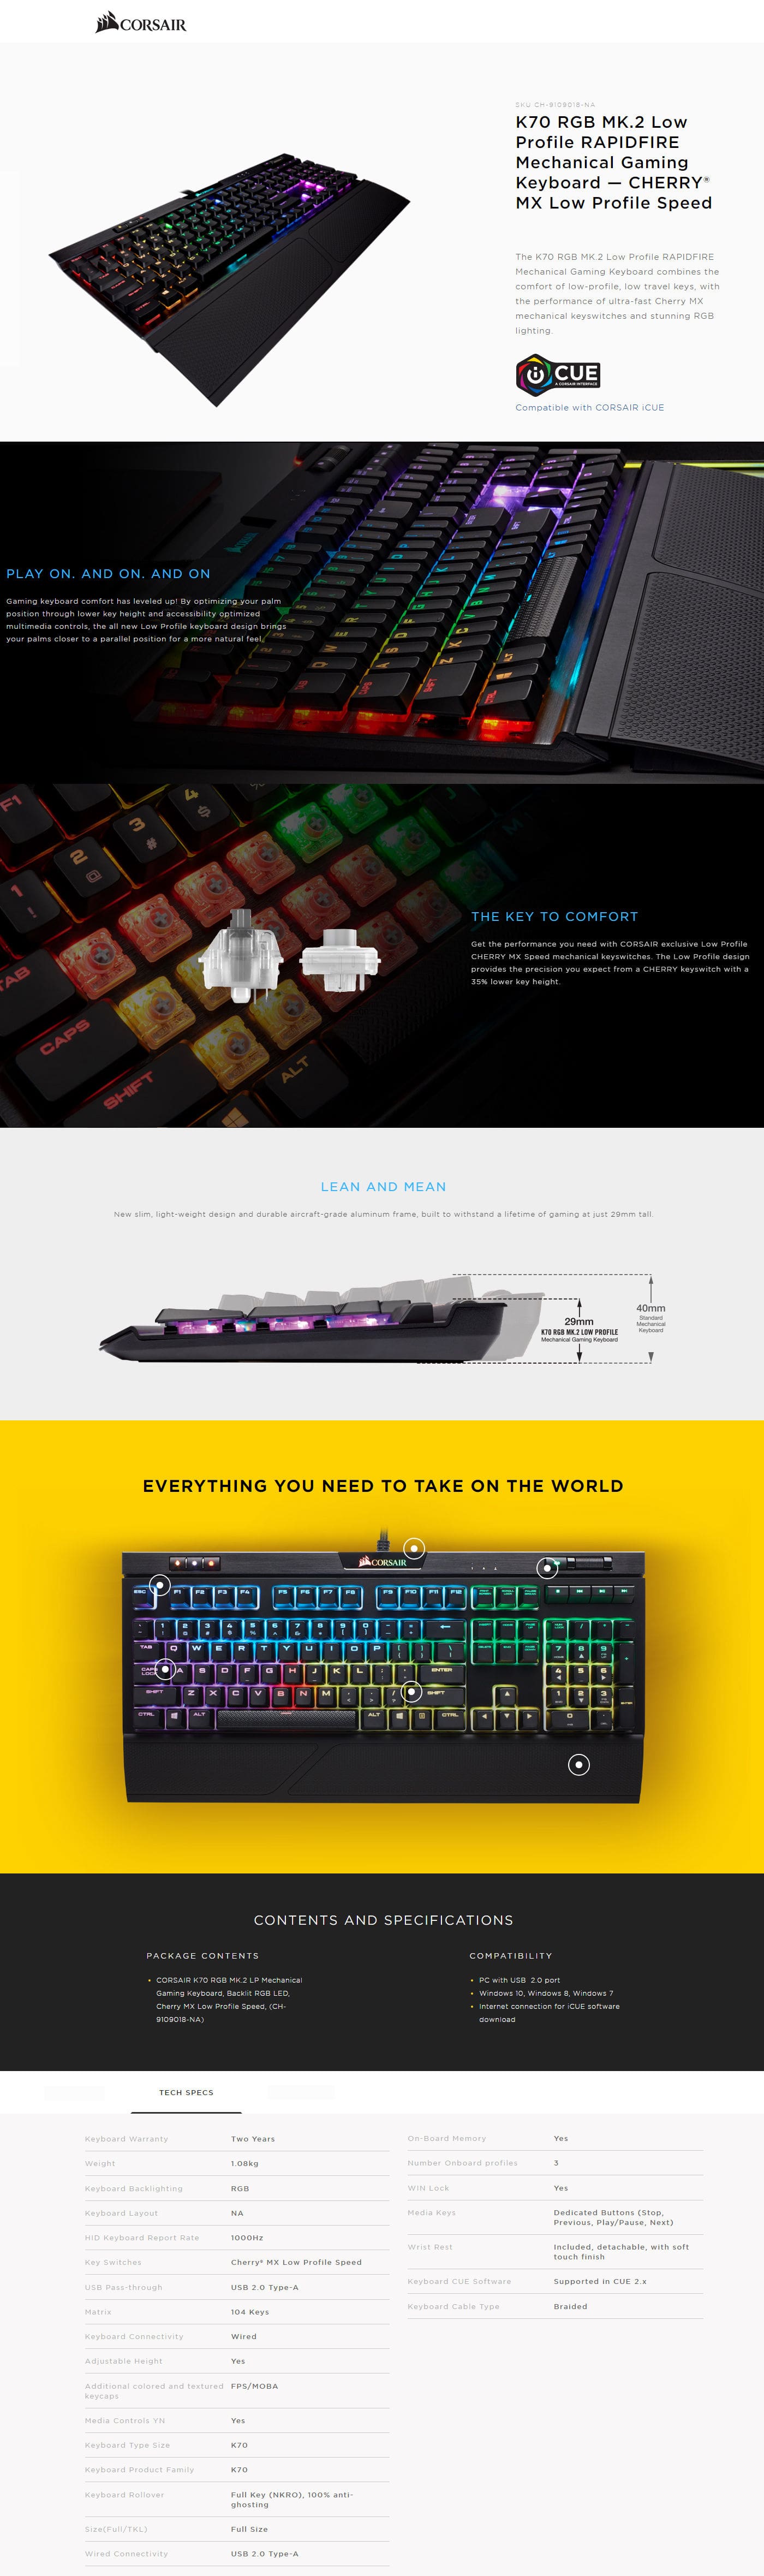  Buy Online Corsair K70 RGB MK.2 Low Profile RAPIDFIRE Mechanical Gaming Keyboard - Cherry MX Low Profile Speed (CH-9109018-NA)